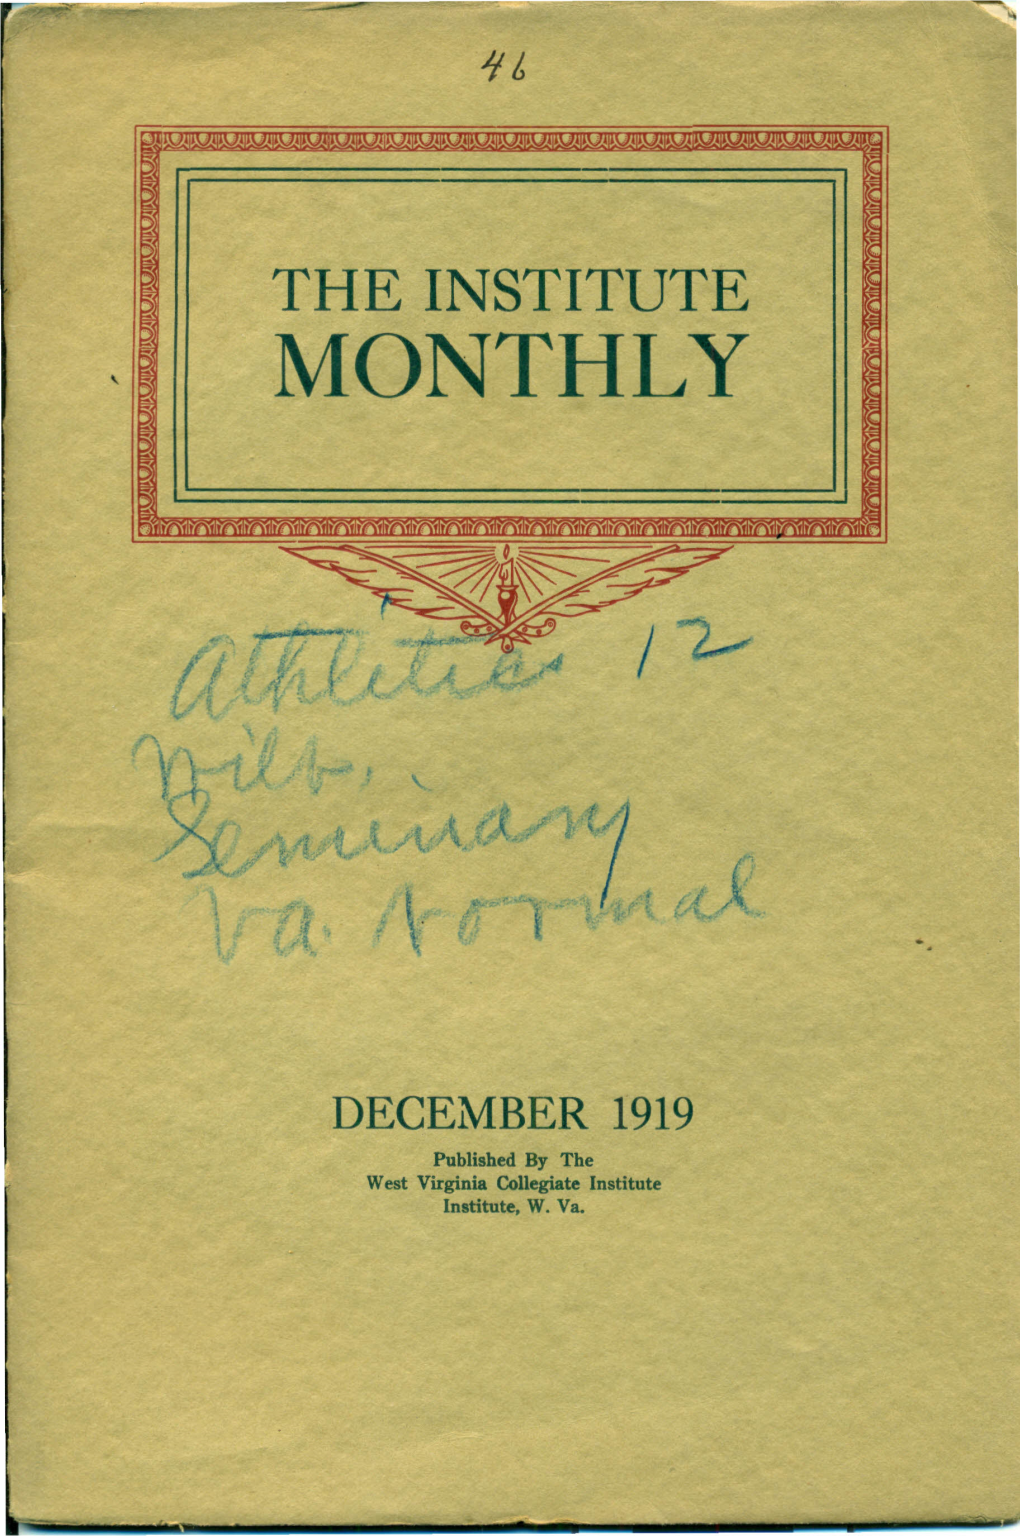 DECEMBER 1919 Published by the West Virginia Collegiate Institute Institute, W